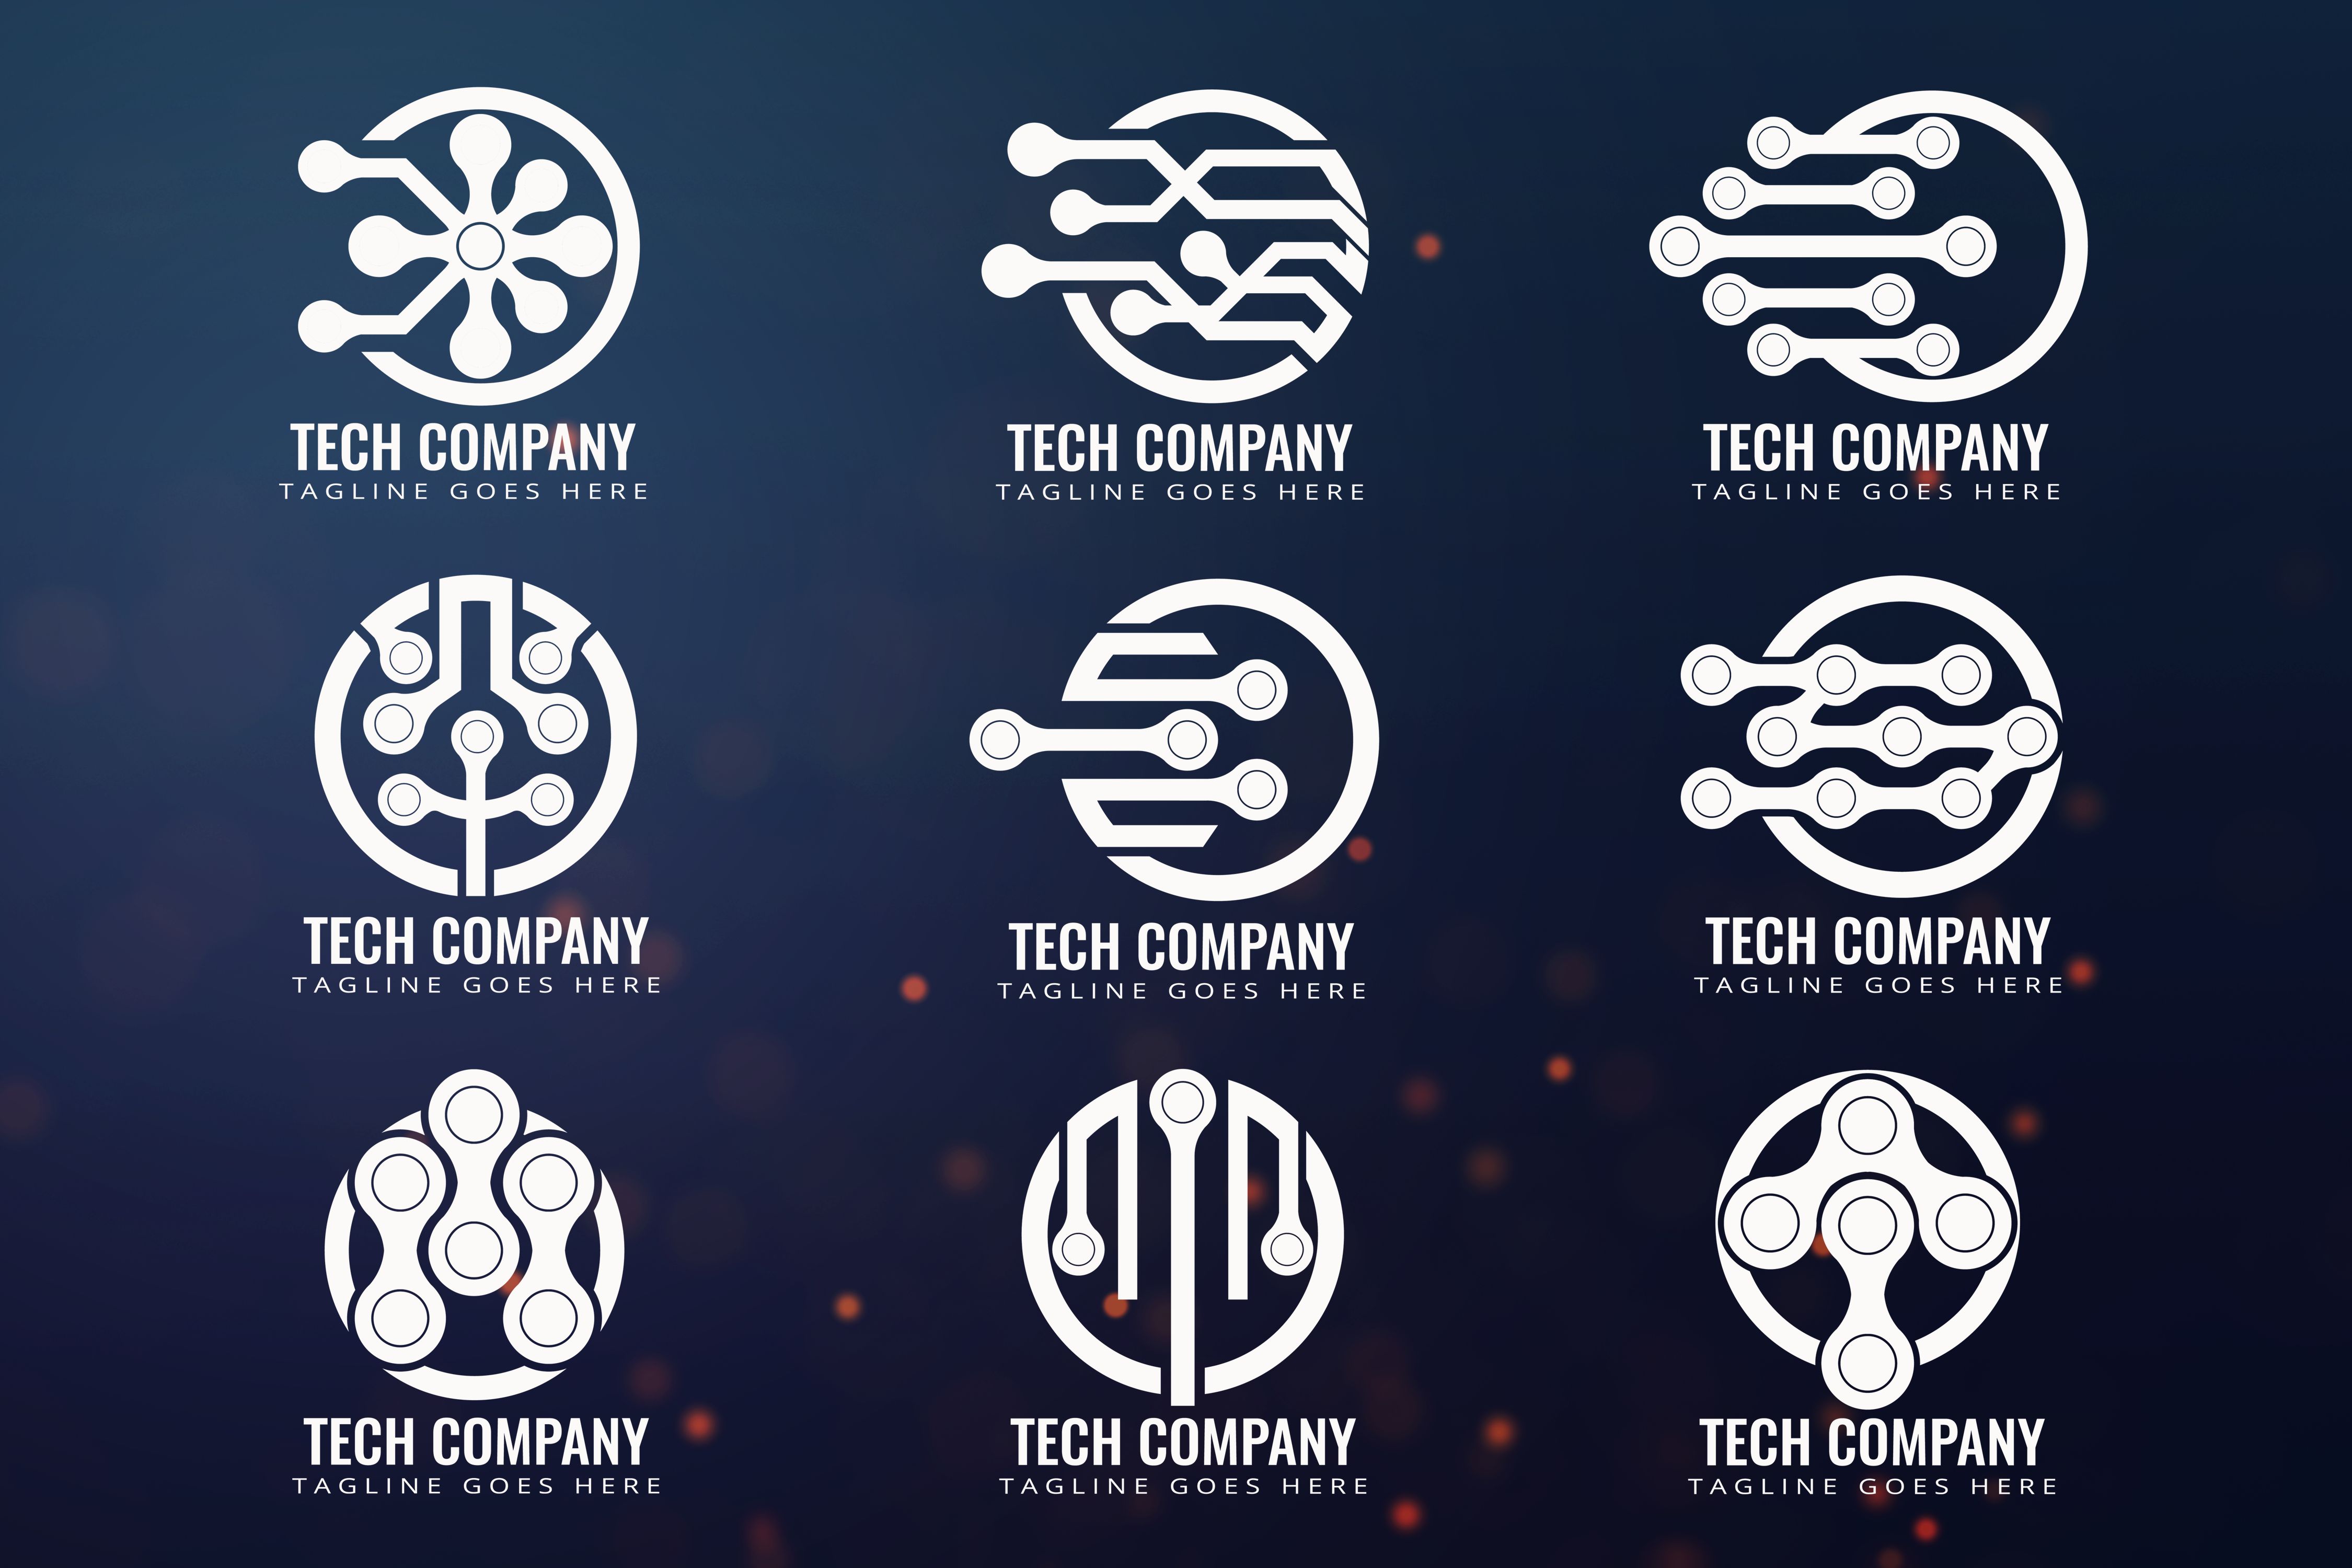 tech company logo maker